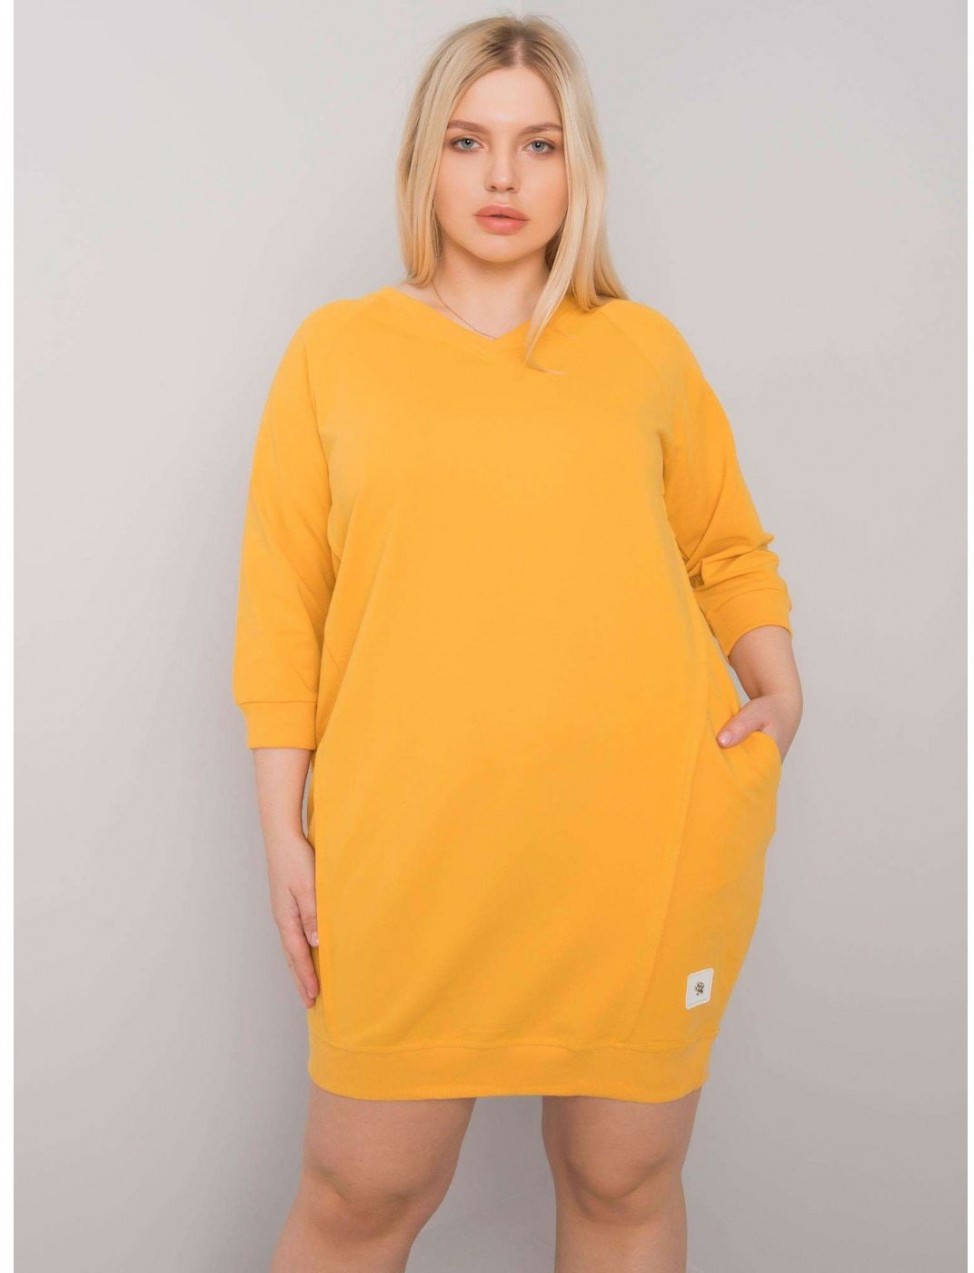 Yellow cotton dress larger size from Karissa